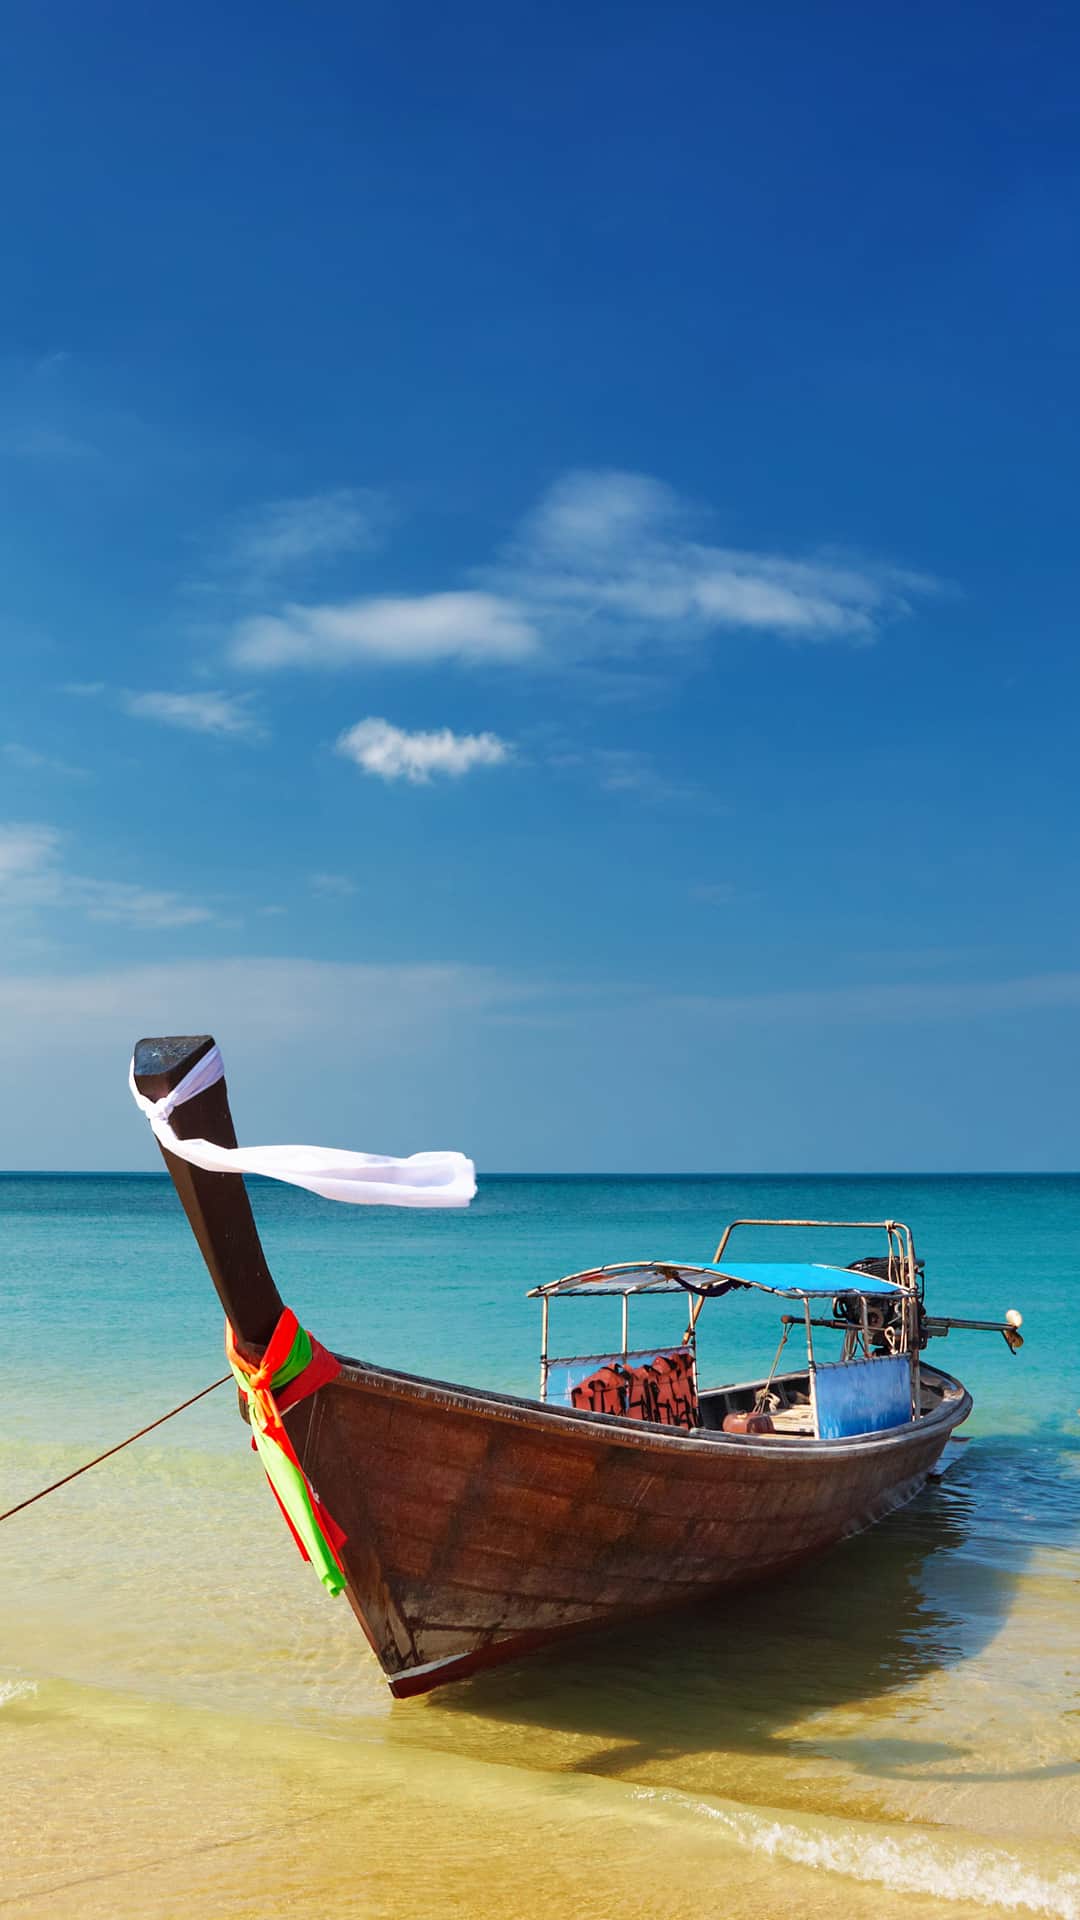 Thailand Beach Shore Boat Android Wallpaper fondos de pantalla android